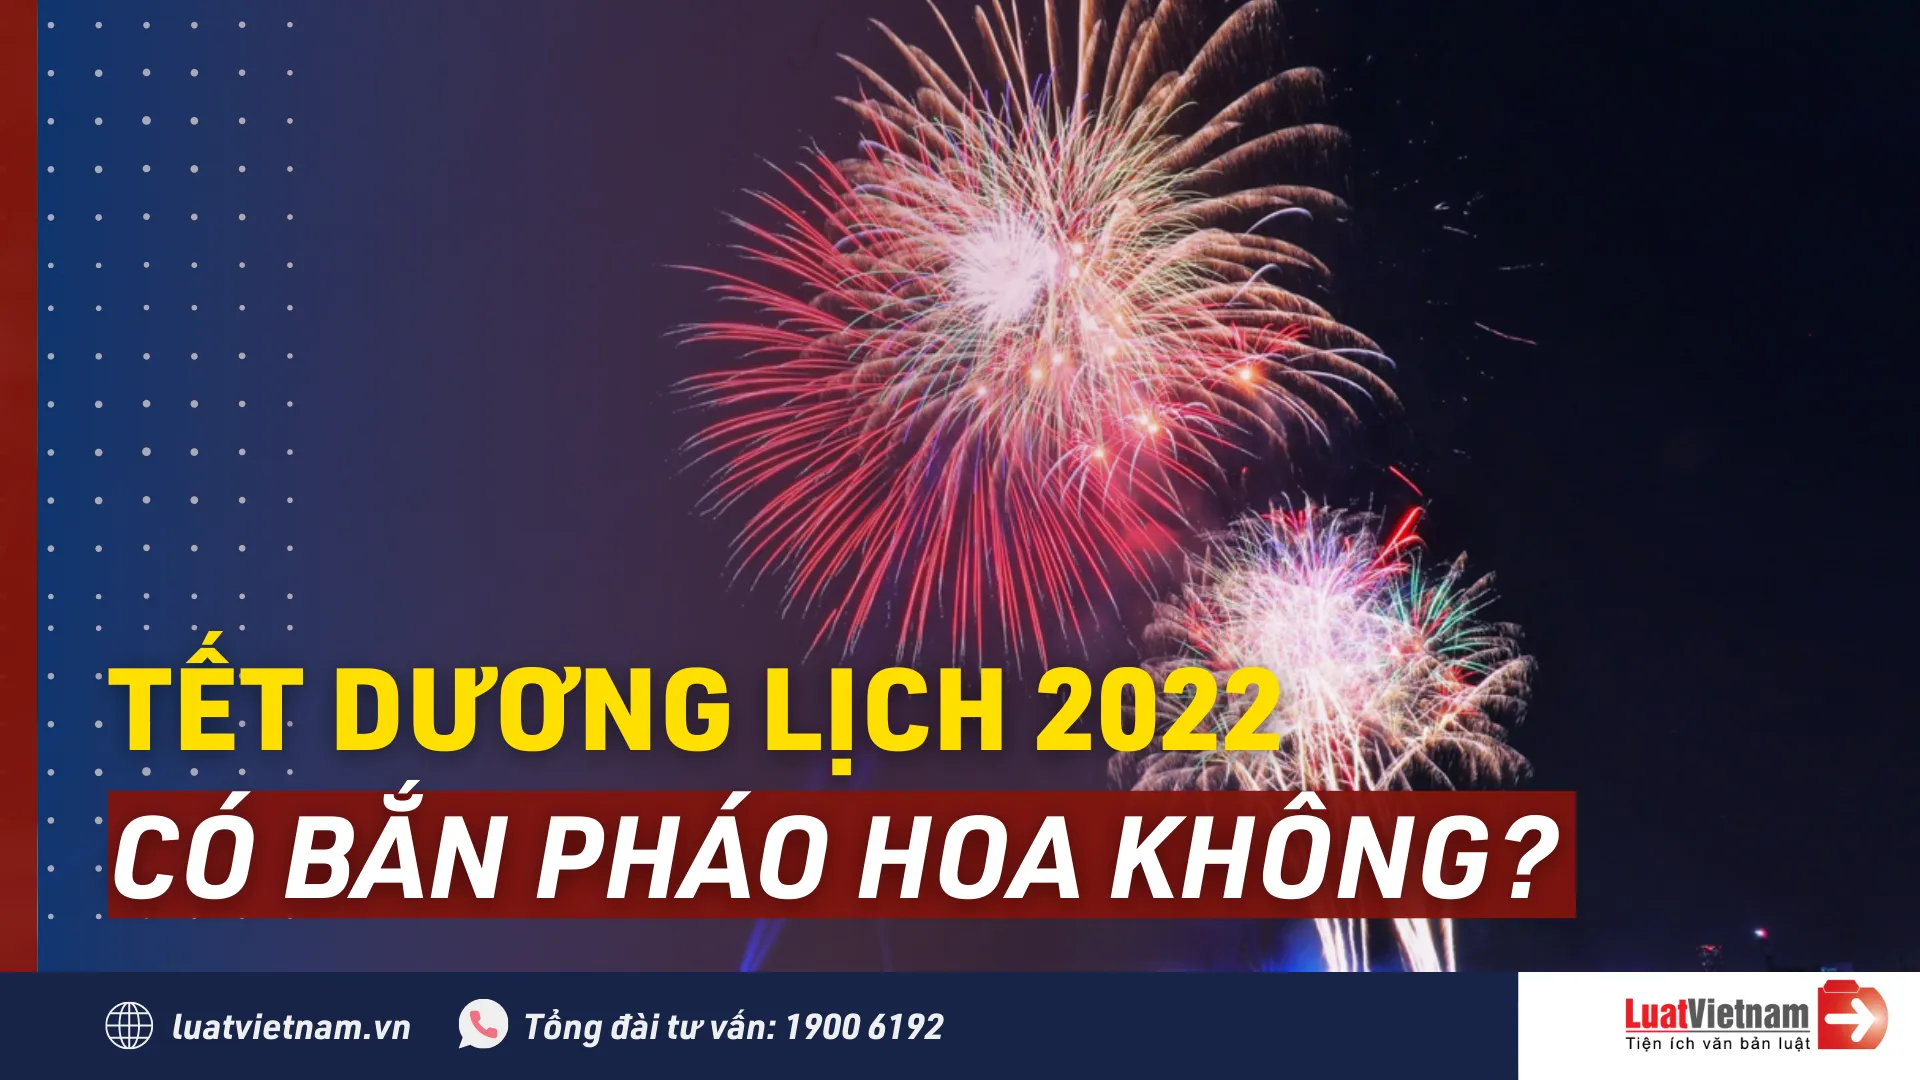 Tet duong lich 2022 co ban phao hoa khong